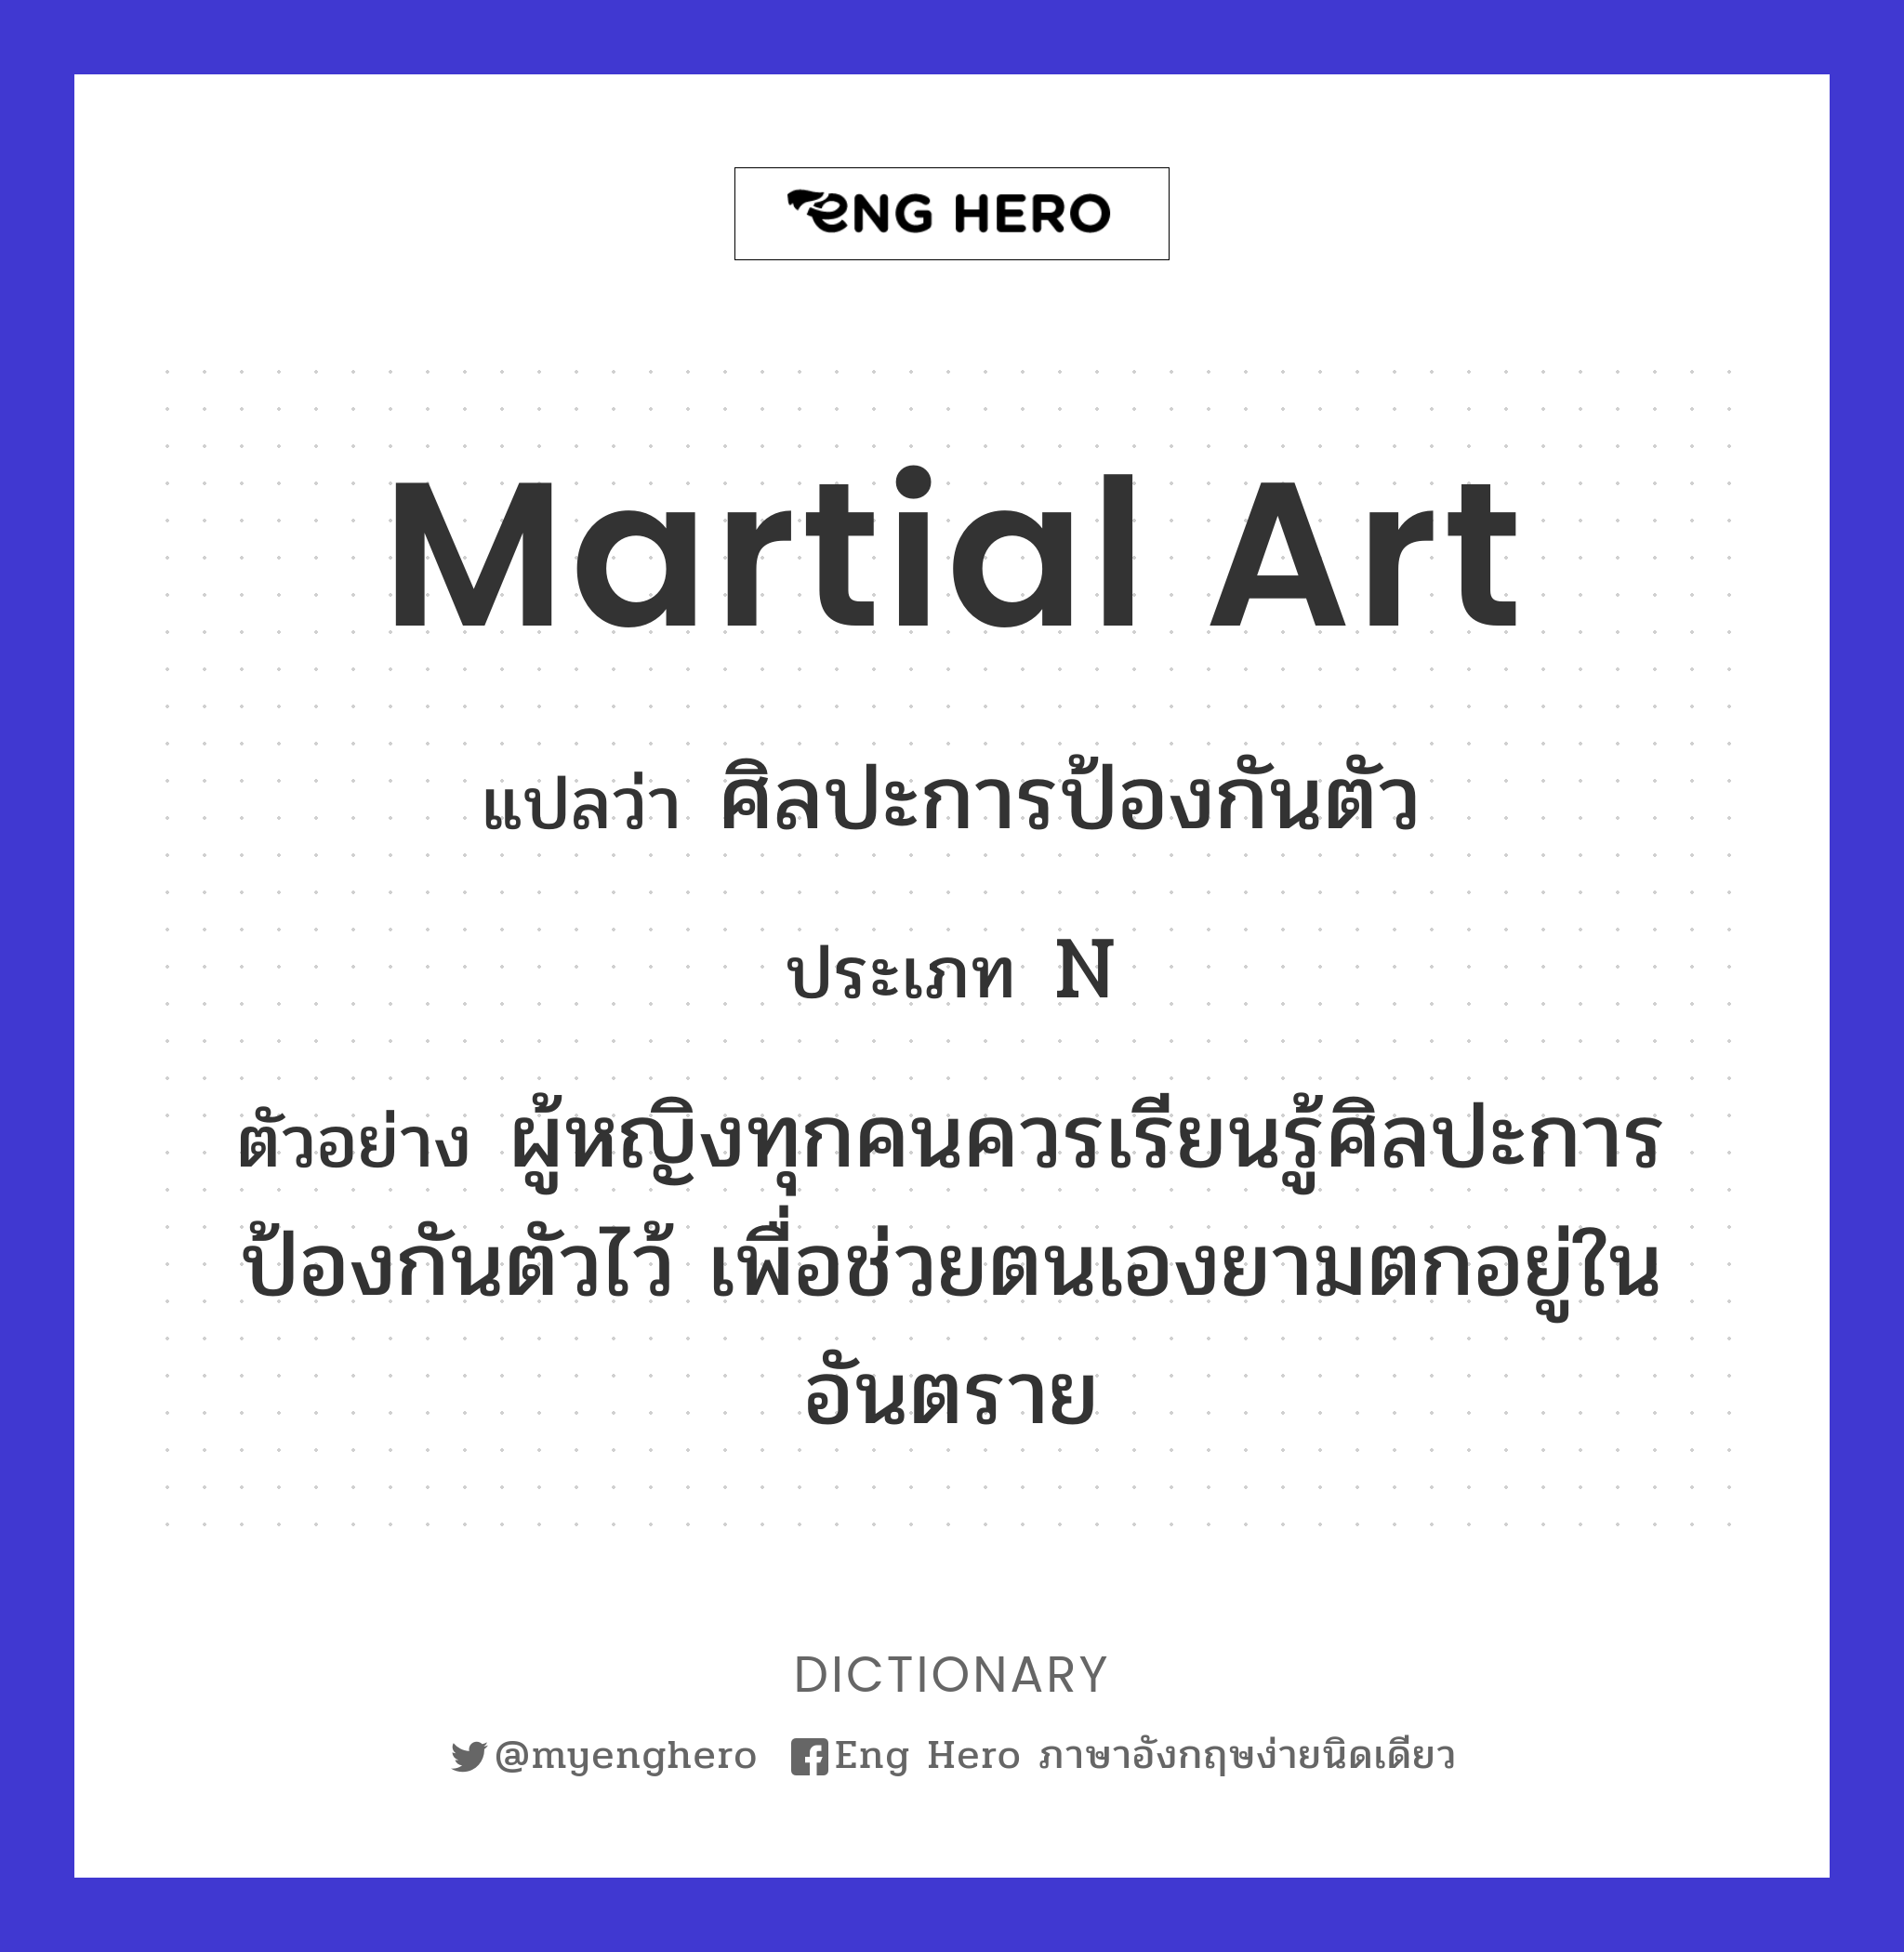 martial art